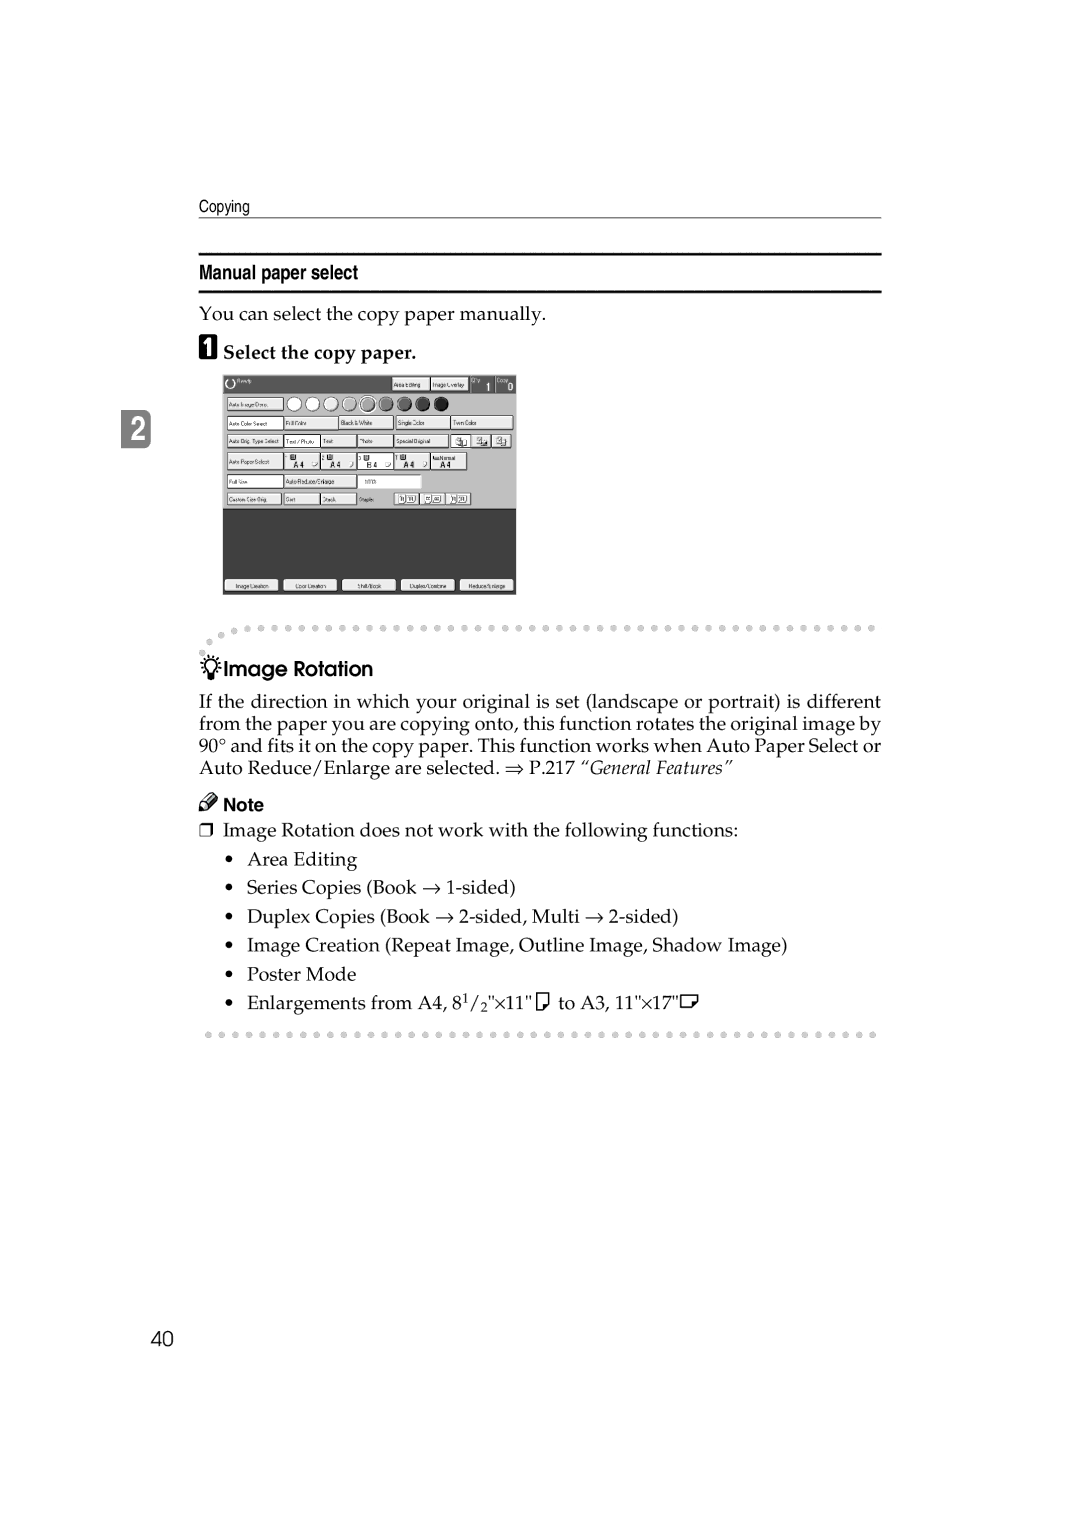 Ricoh 6513 manual Manual paper select, Image Rotation, Select the copy paper 